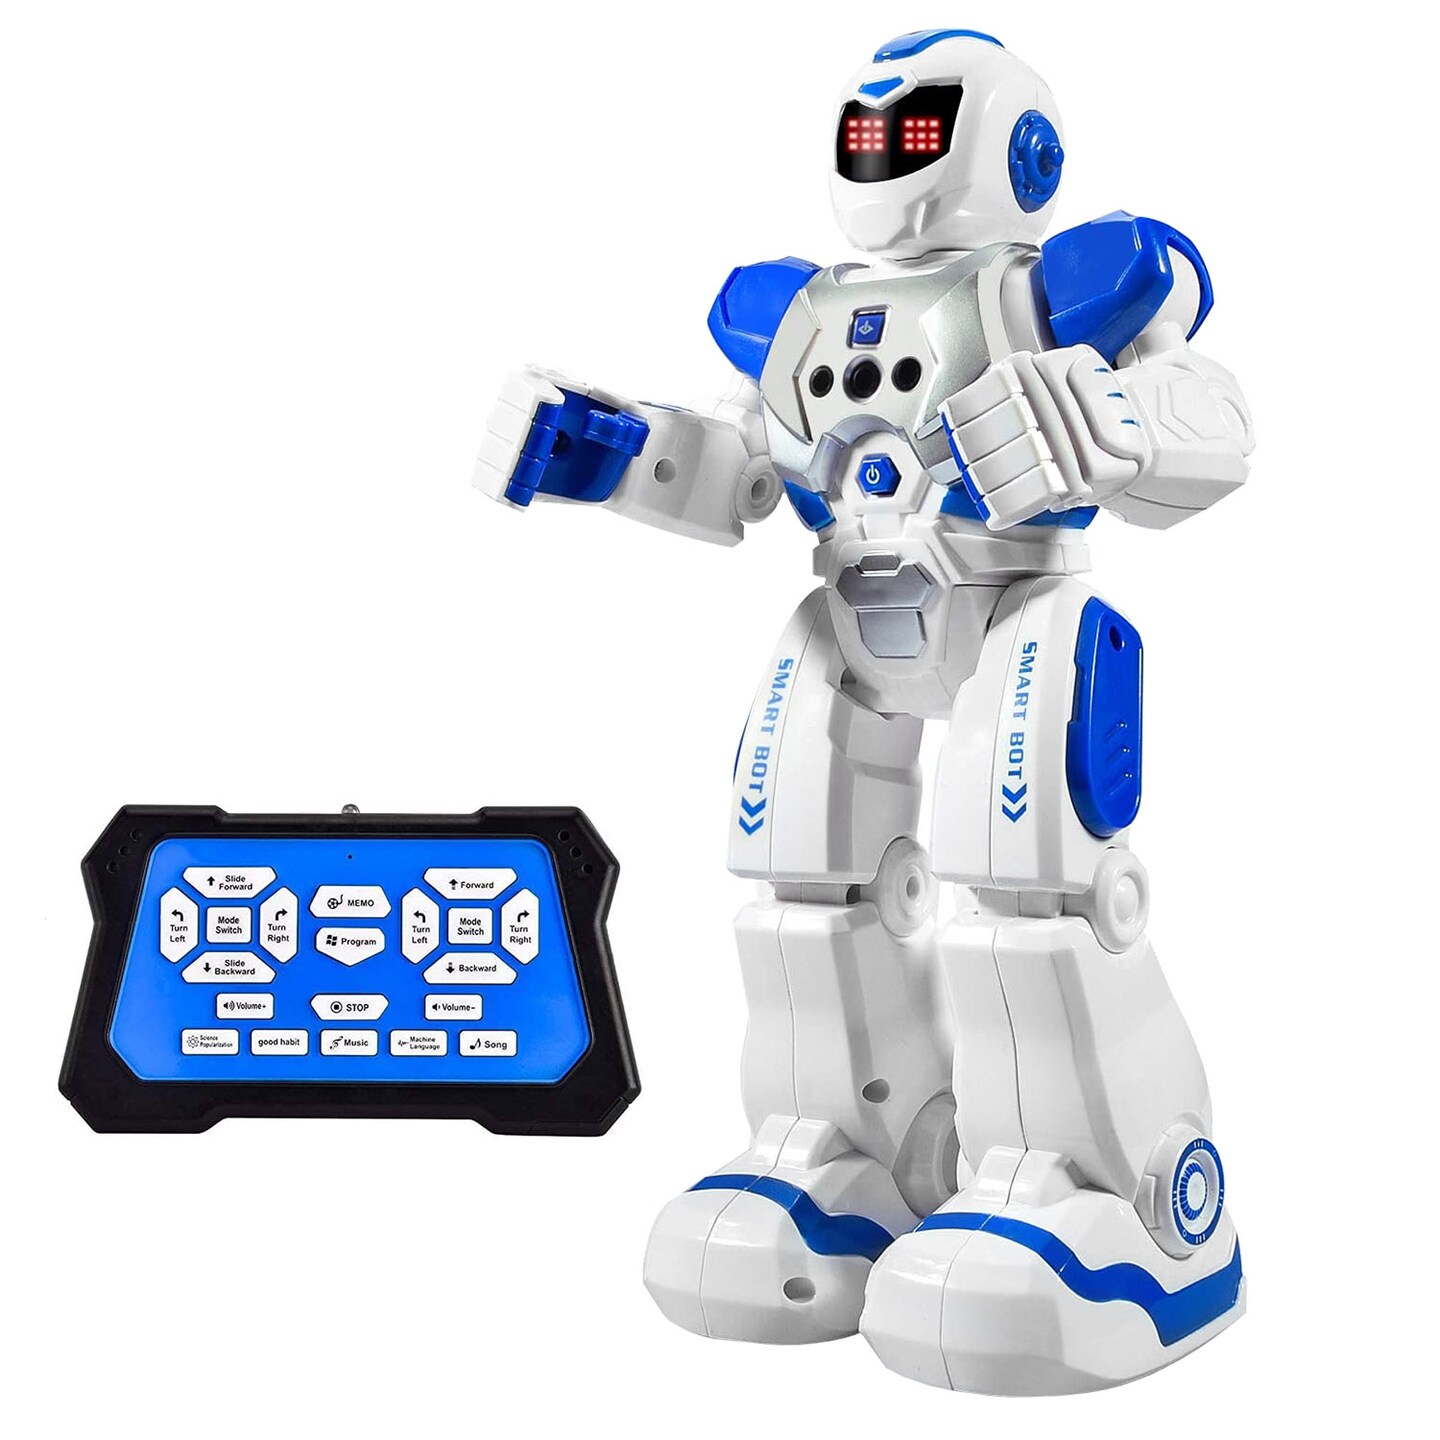 Global Phoenix Intelligent Remote Control Robot Gesture Sensing Smart Programmable Robot Walking Singing Dancing Educational Toy